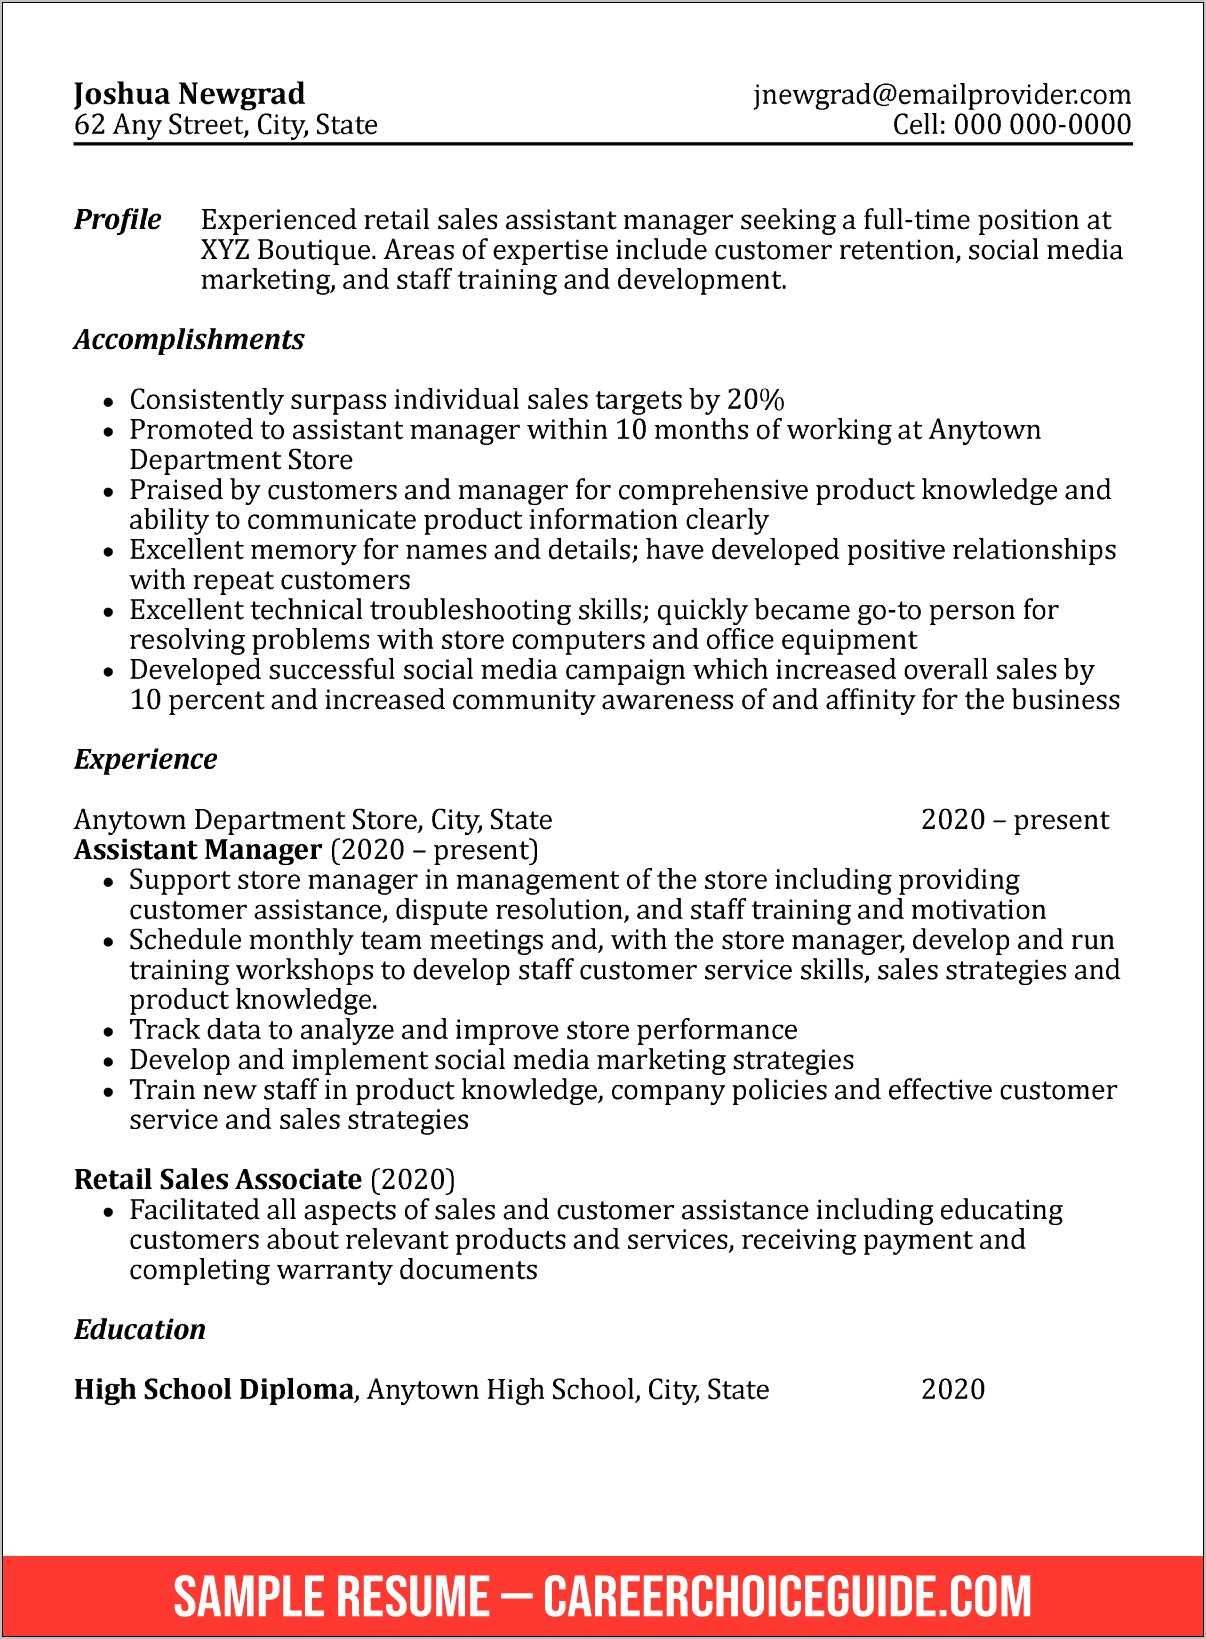 High School Resume Objective Samples